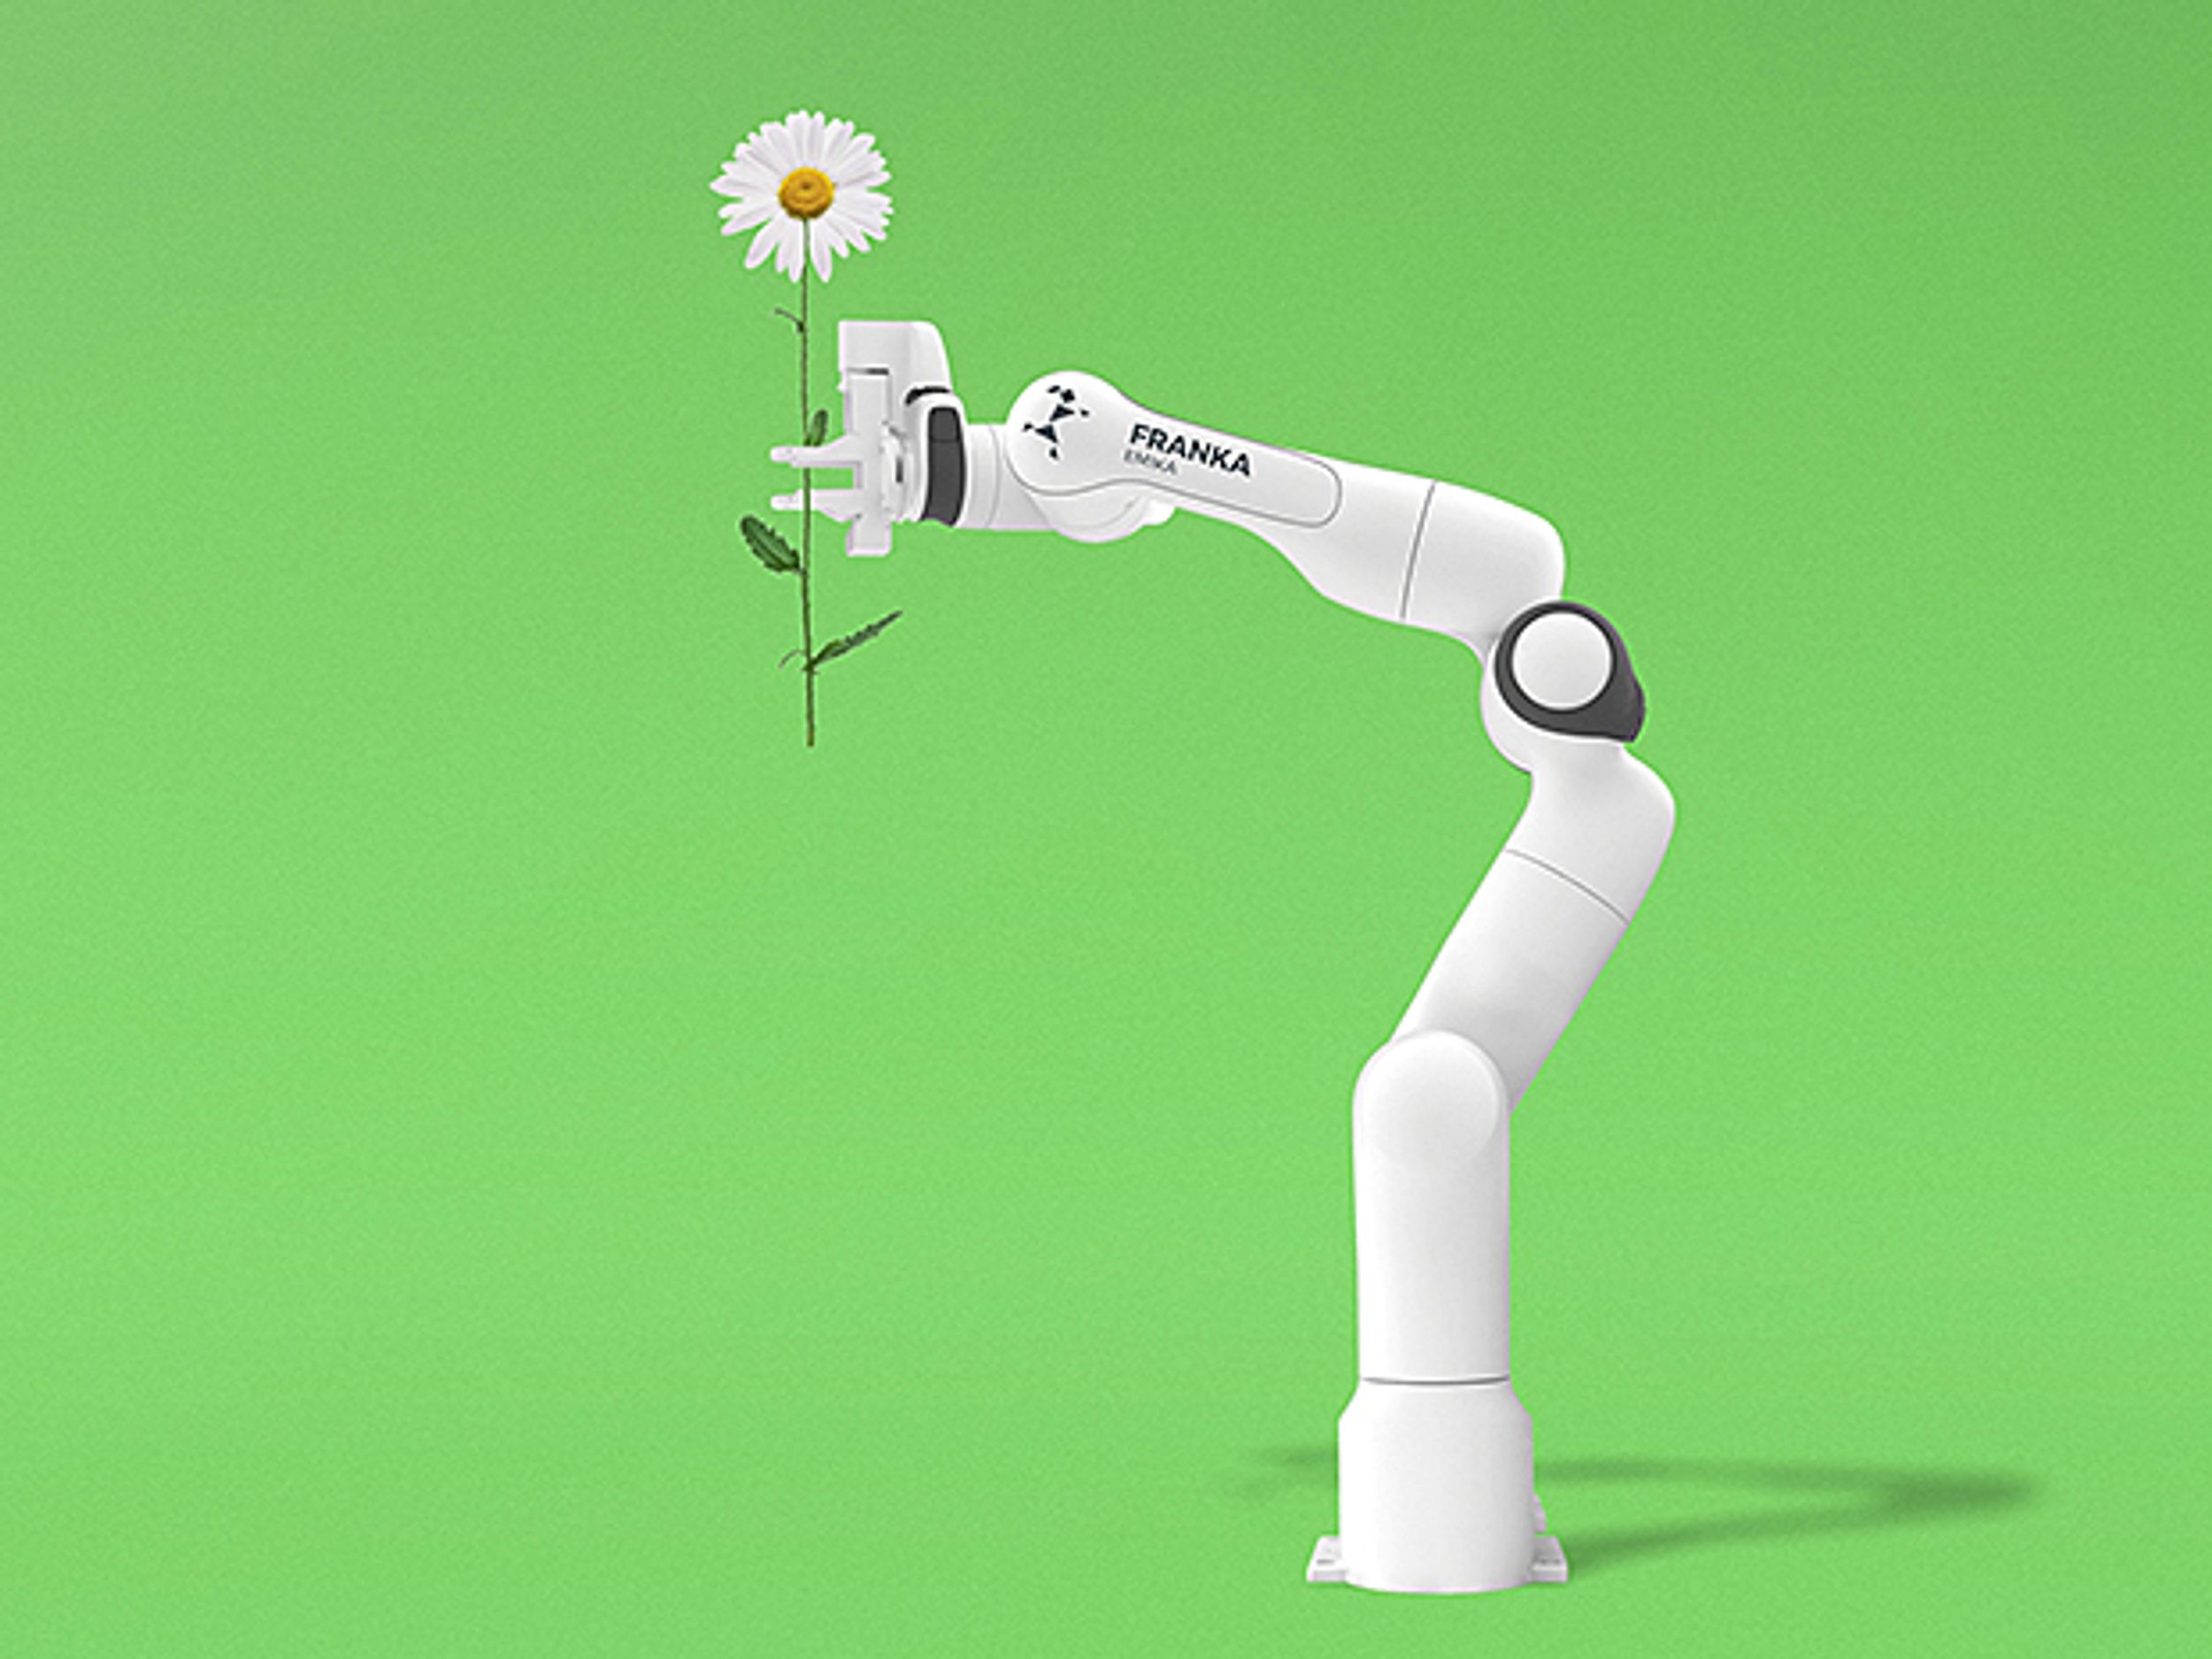 Illustration of a robot arm